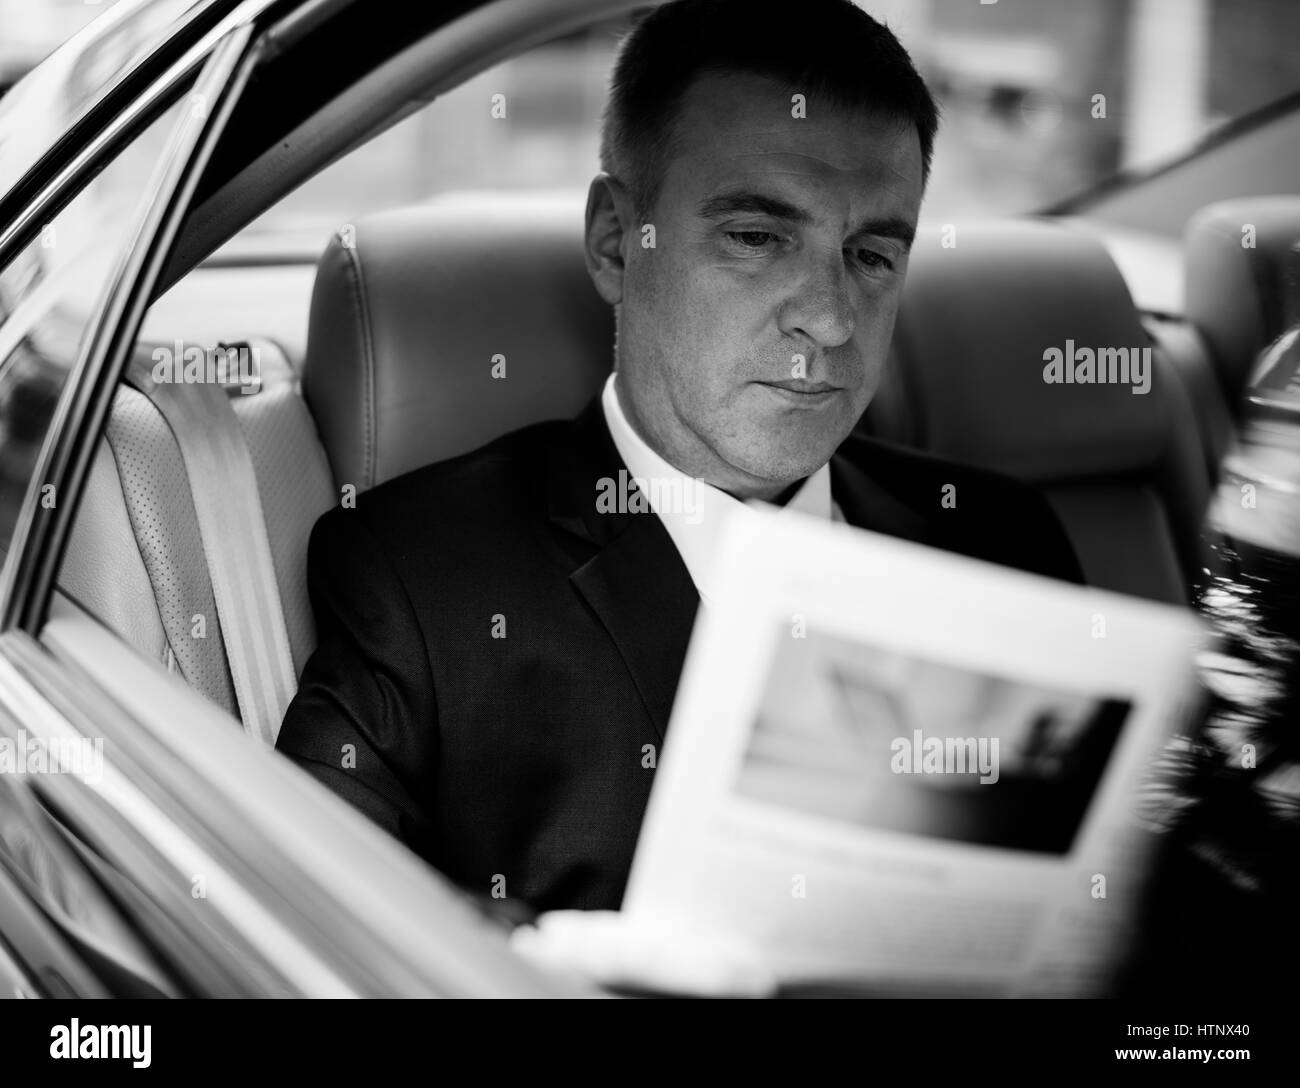 Businessman Working Busy Car Inside Stock Photo